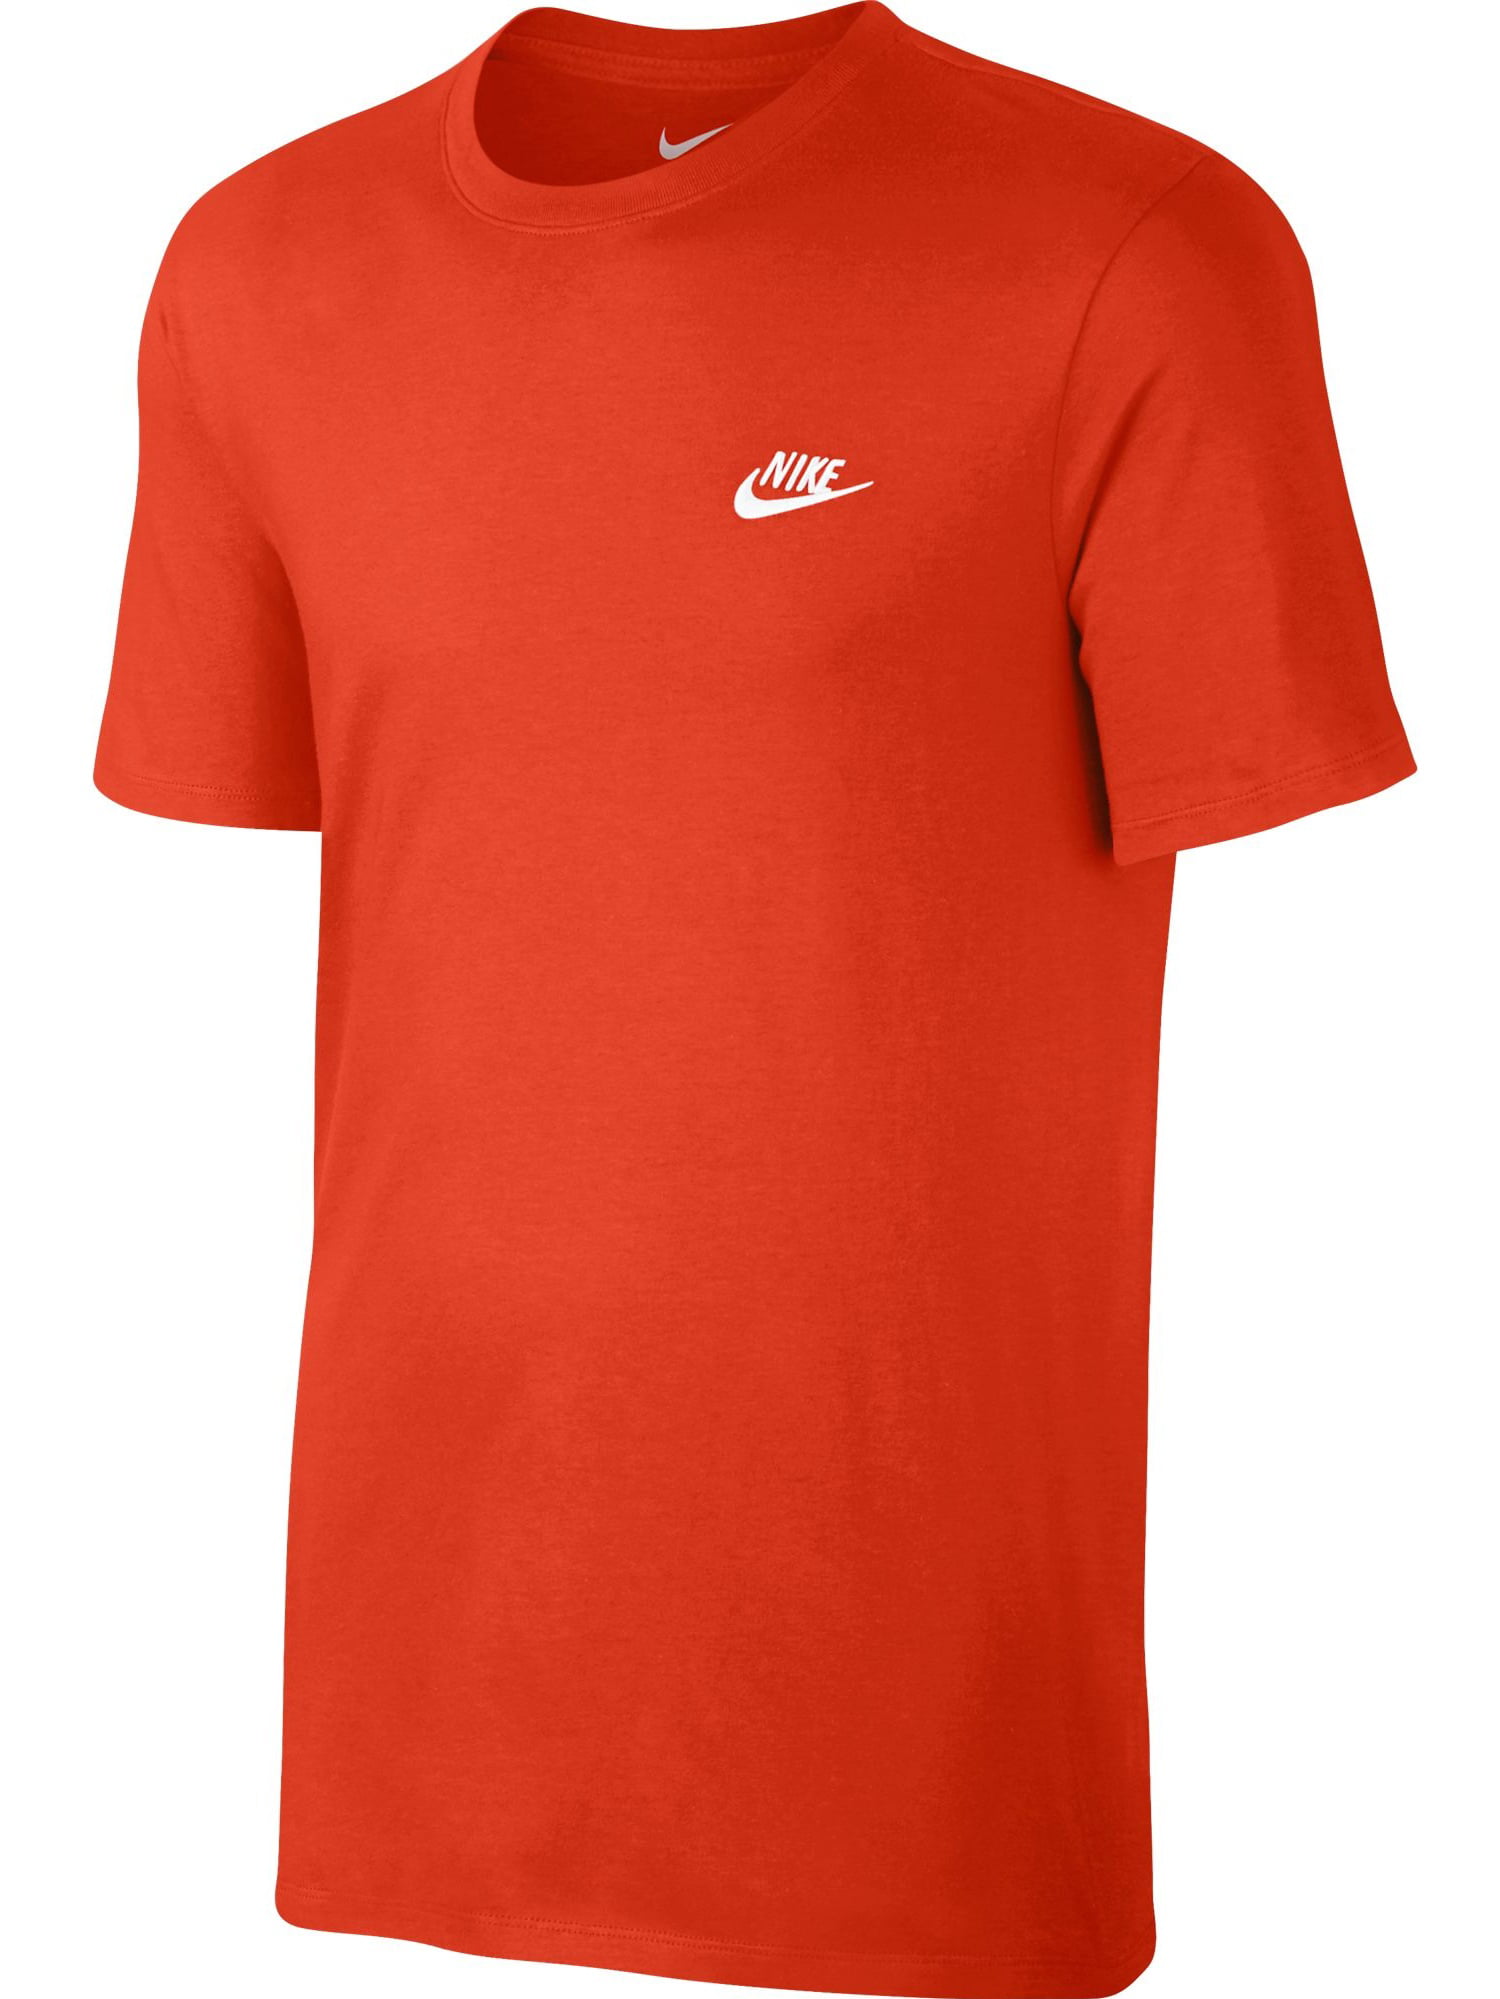 Nike - Nike Sportswear Embroidered Swoosh Logo Men's T-Shirt Orange/White 827021-891 - Walmart ...